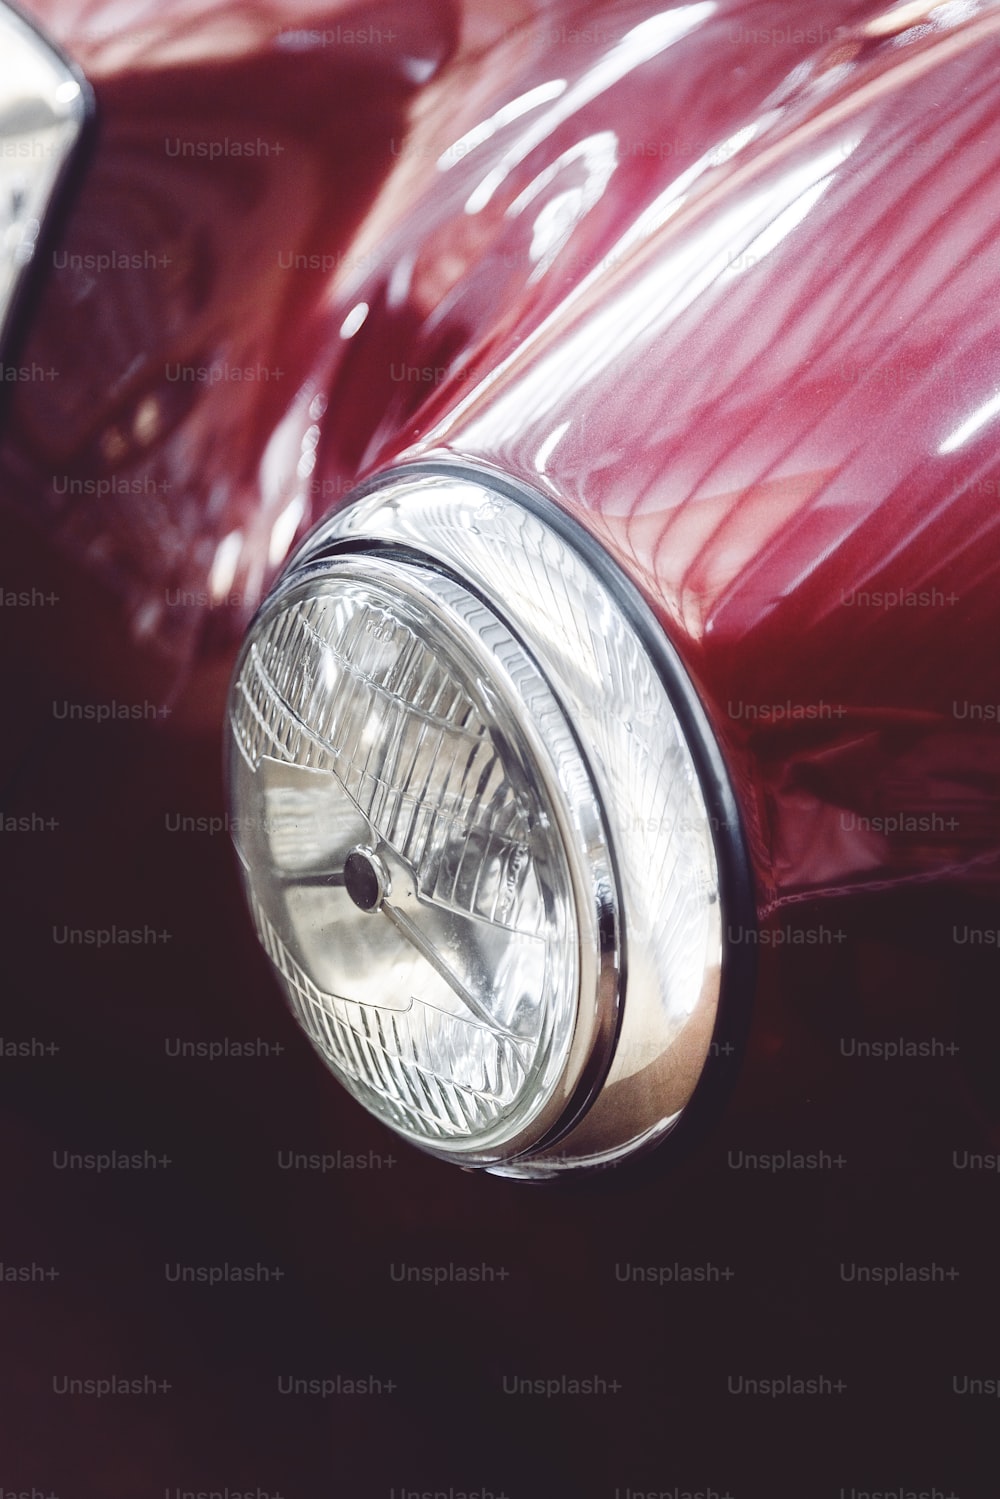 a close up of a shiny red car headlight